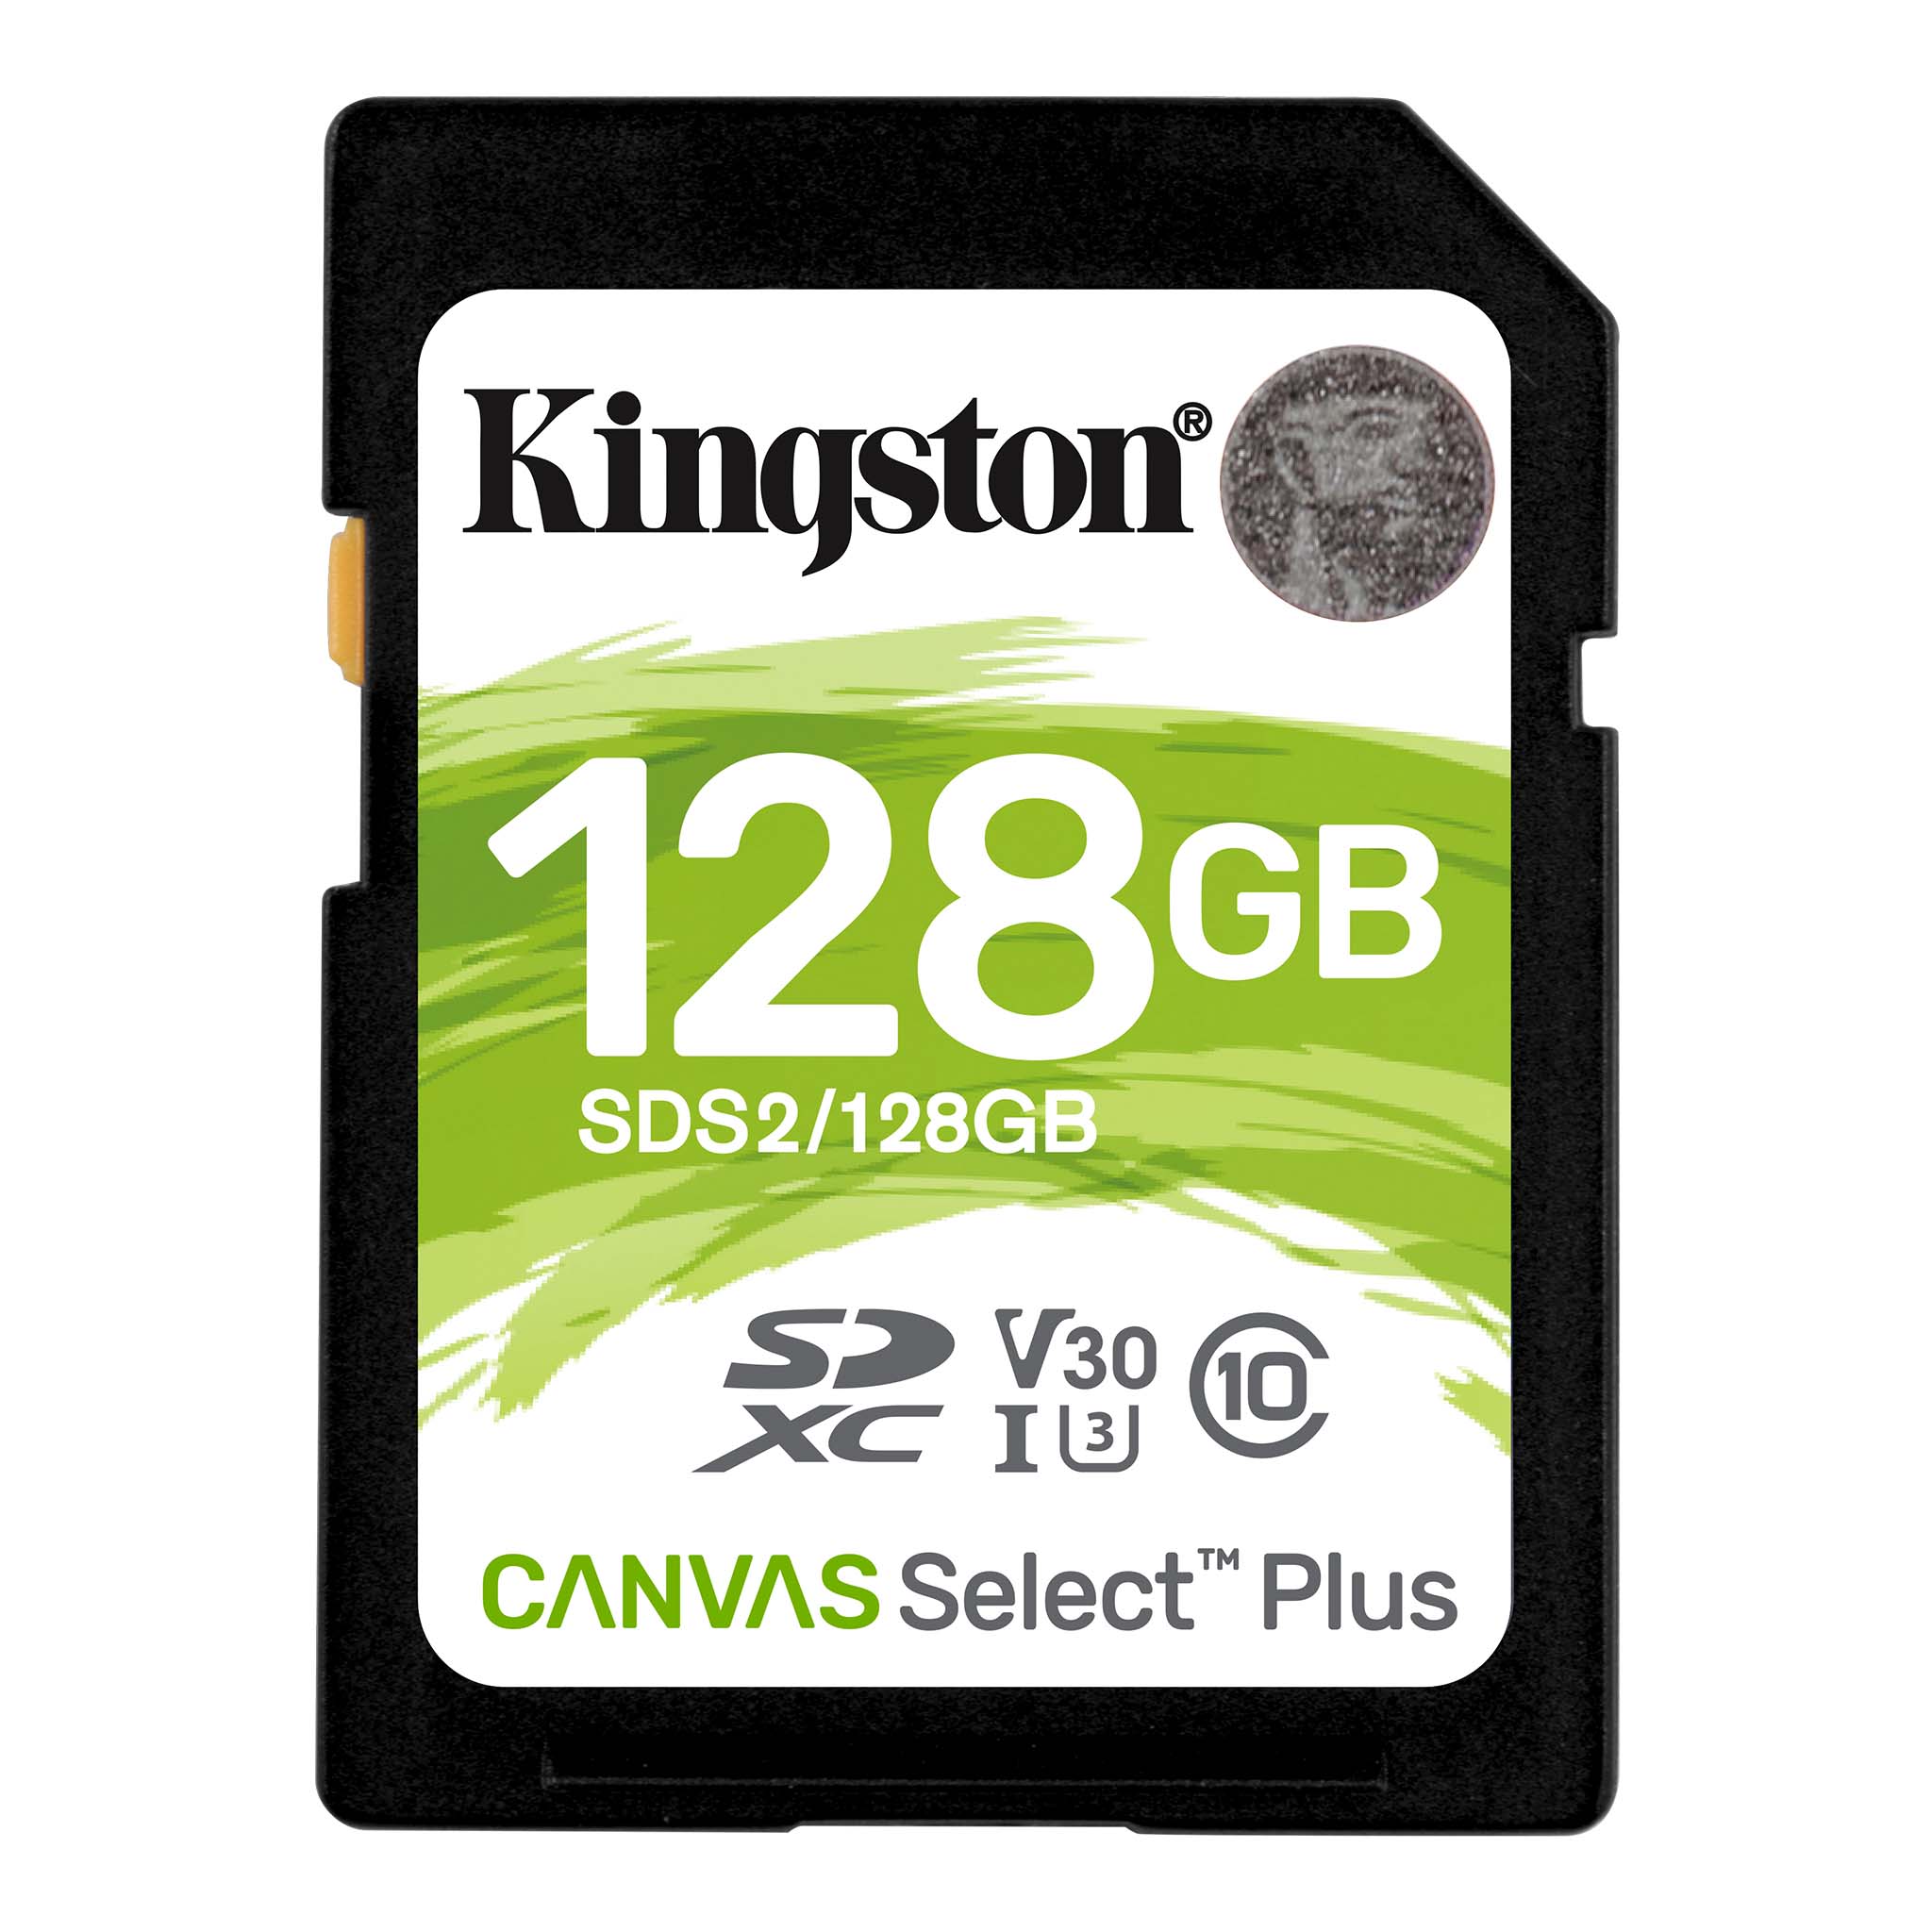 Kingston 32GB Nokia Lumia 830 MicroSDHC Canvas Select Plus Card Verified by SanFlash. 100MBs Works with Kingston